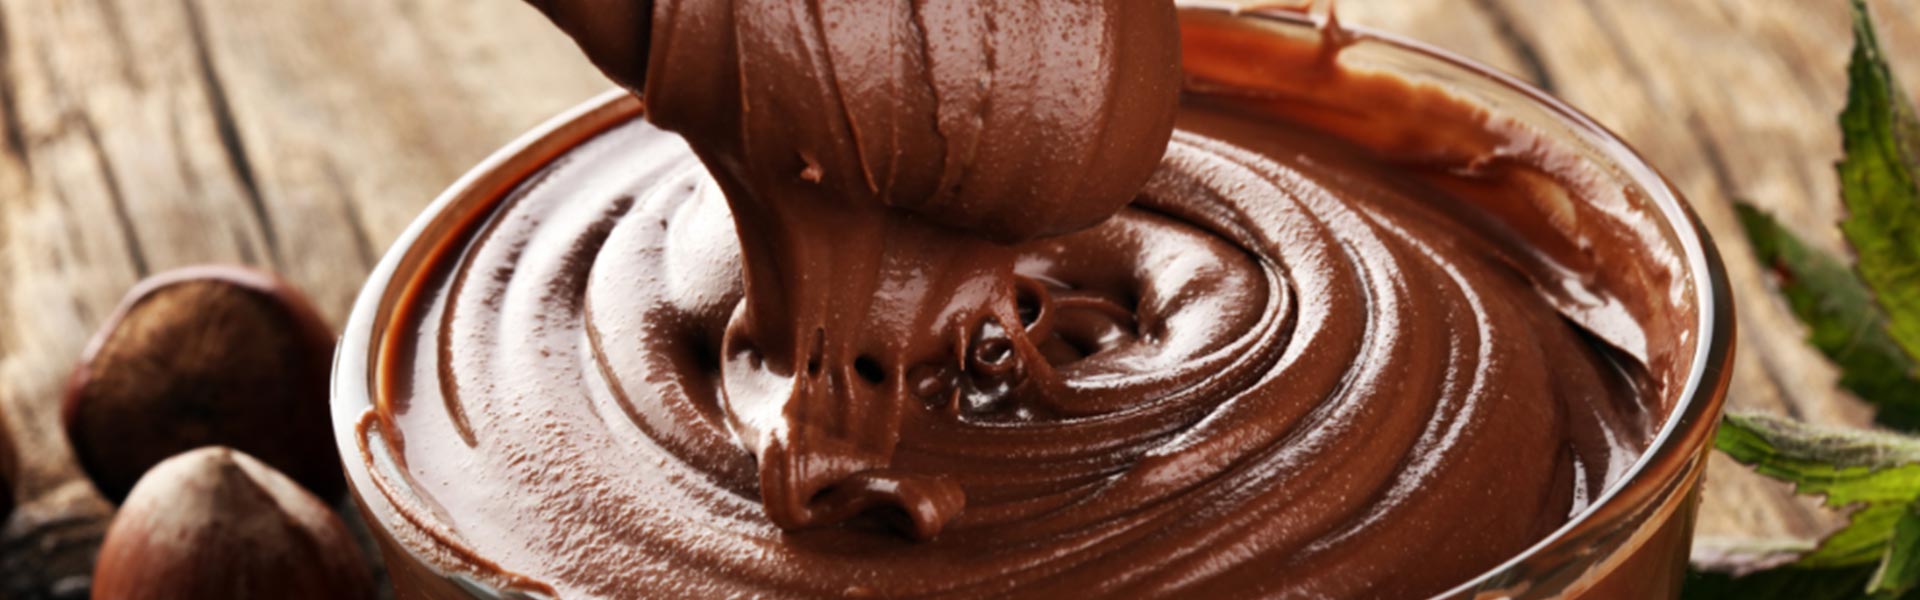 Decadent Home-Made Nutella Pots Recipe